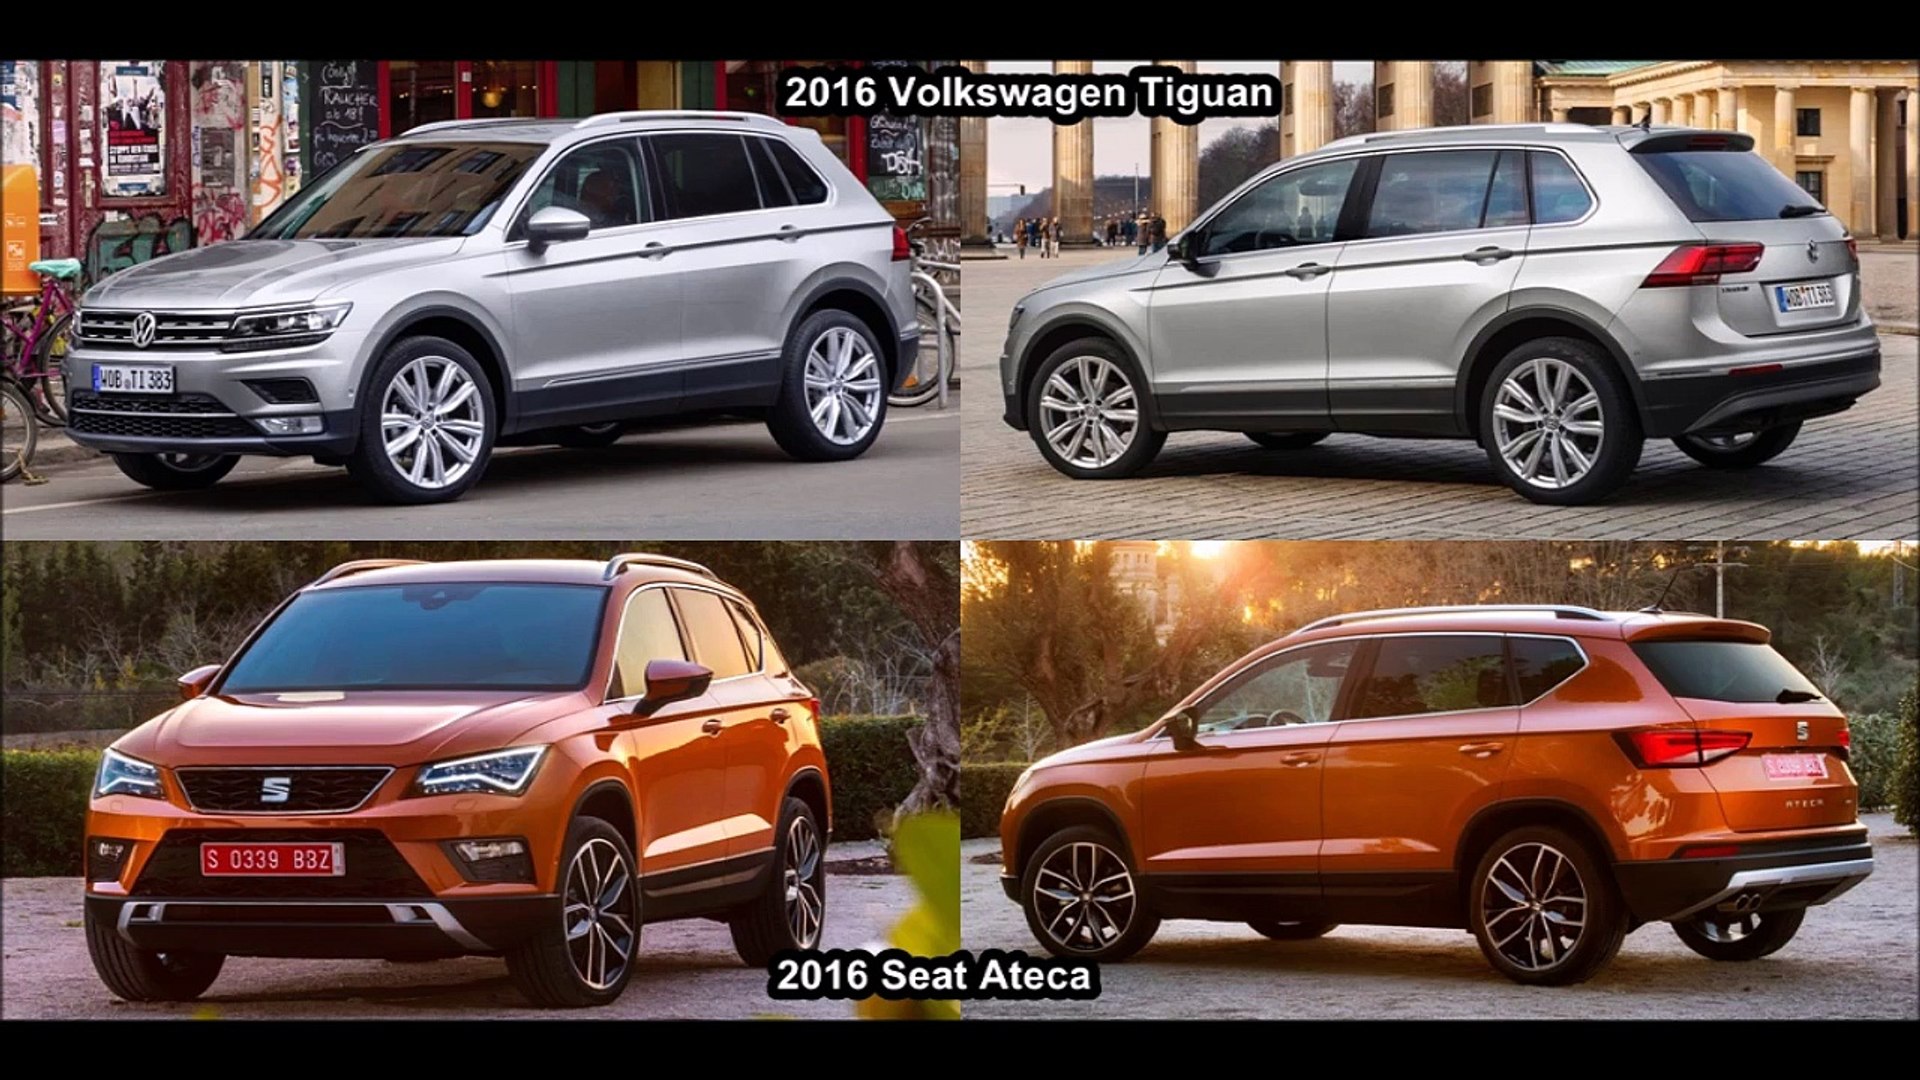 2016 VW Tiguan Vs 2016 Seat Ateca DESIGN! - Dailymotion Video